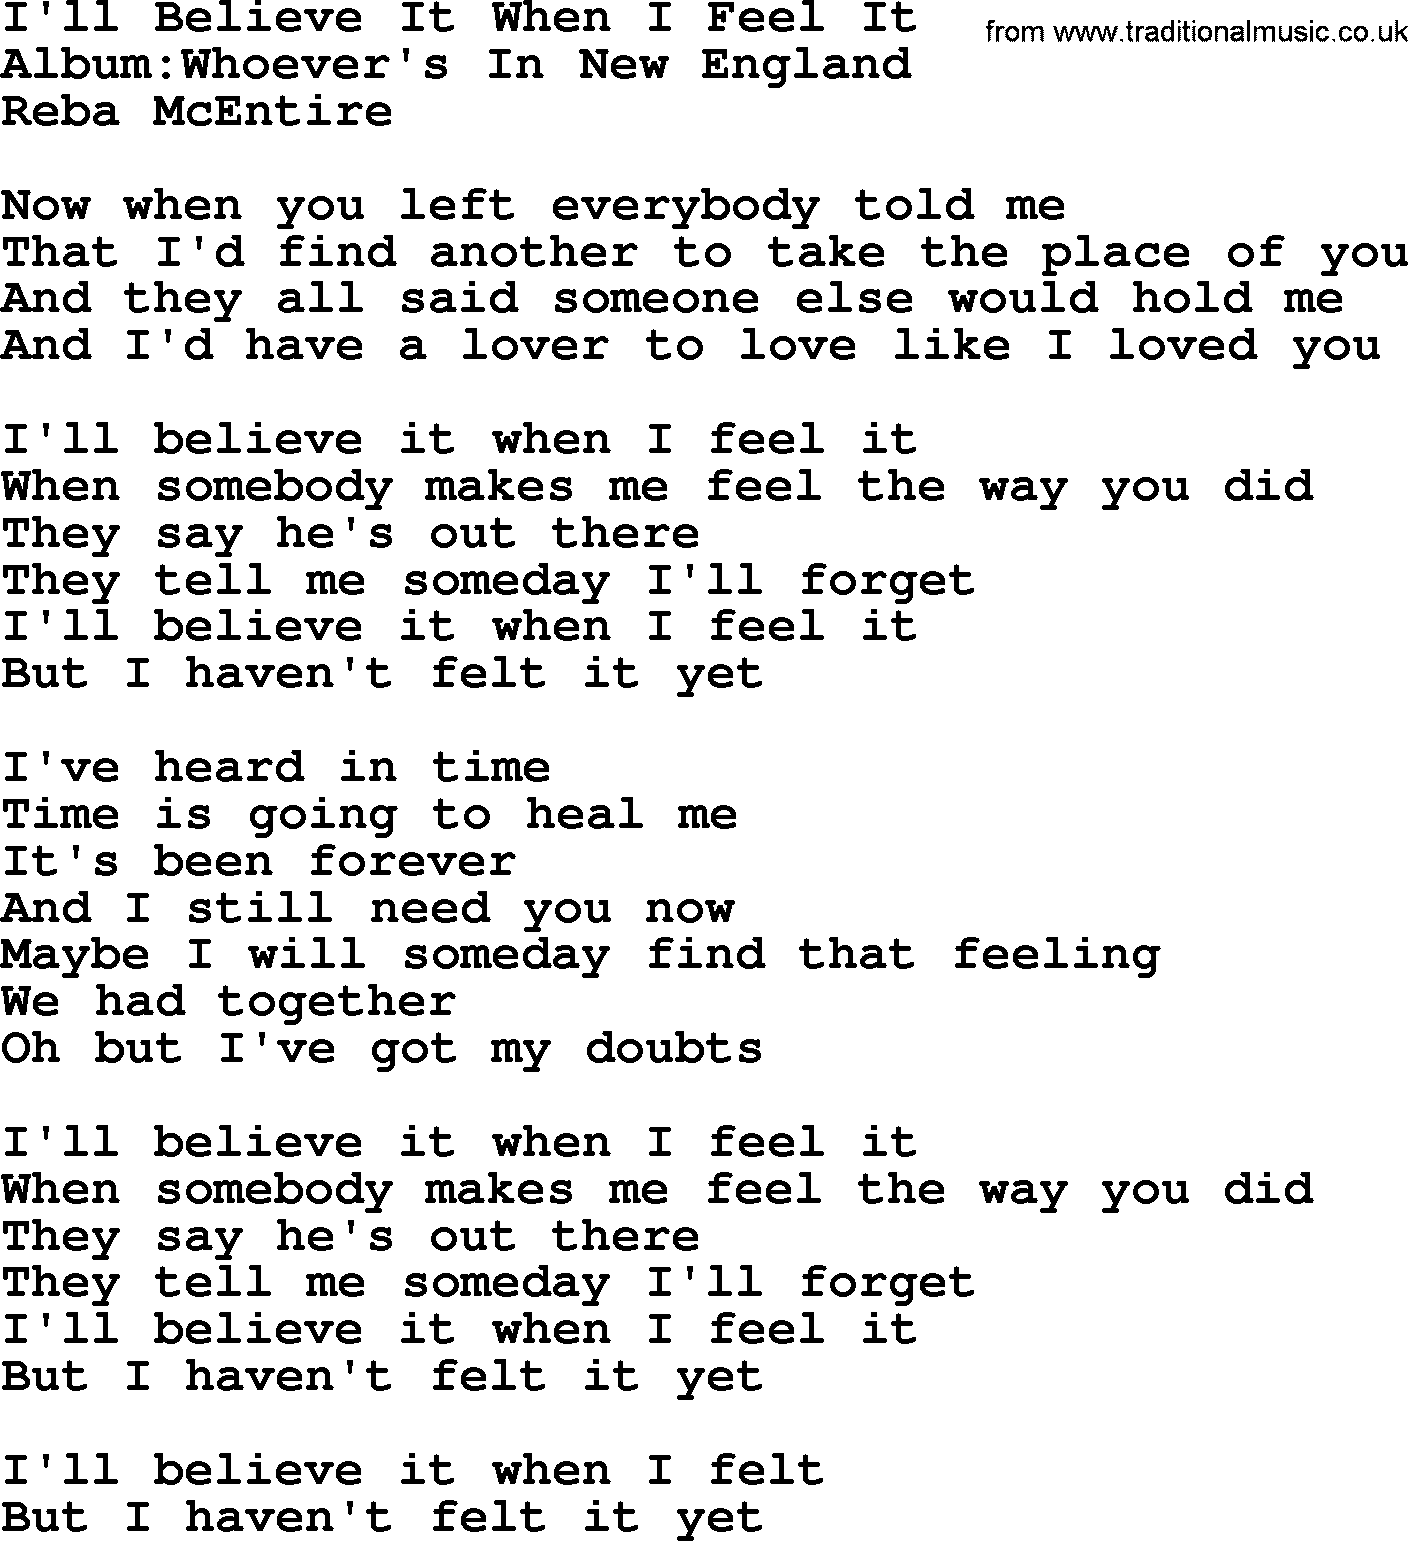 Reba McEntire song: I'll Believe It When I Feel It lyrics